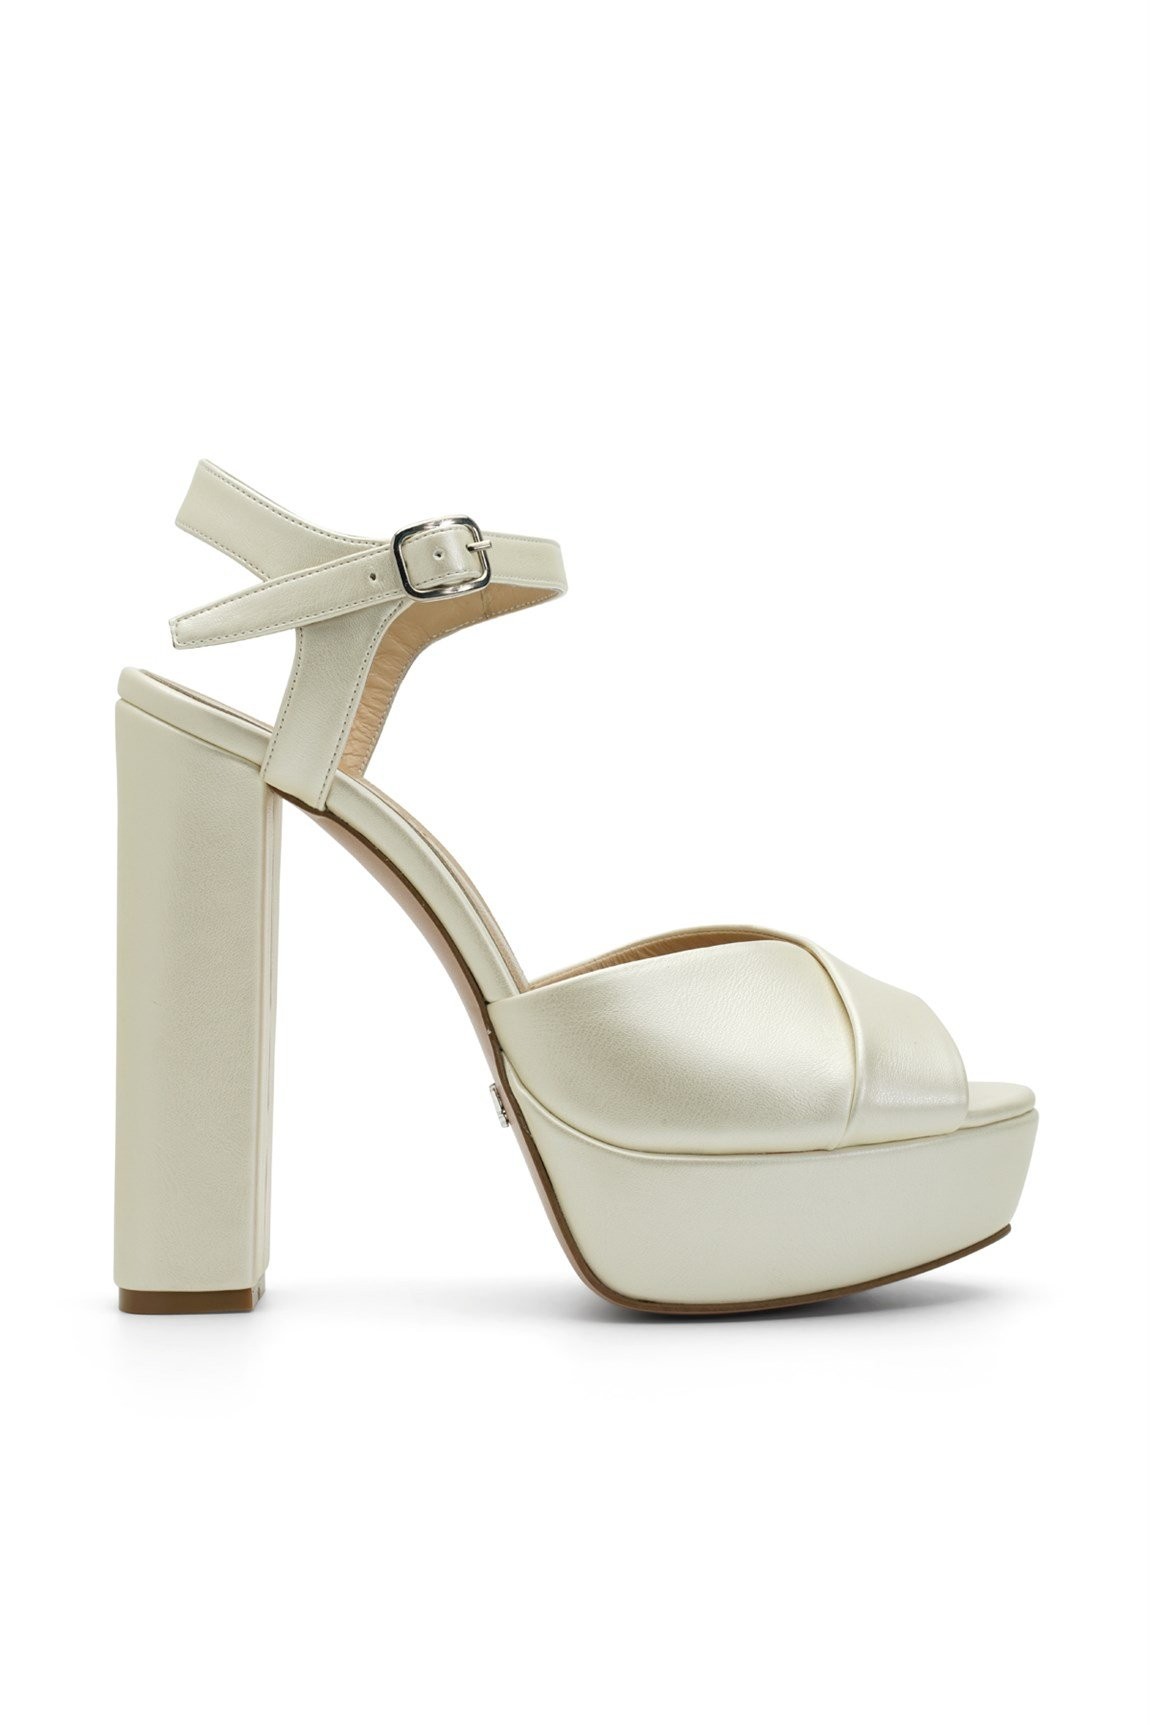 Jabotter Carla Pearlescent White Bridal Shoe